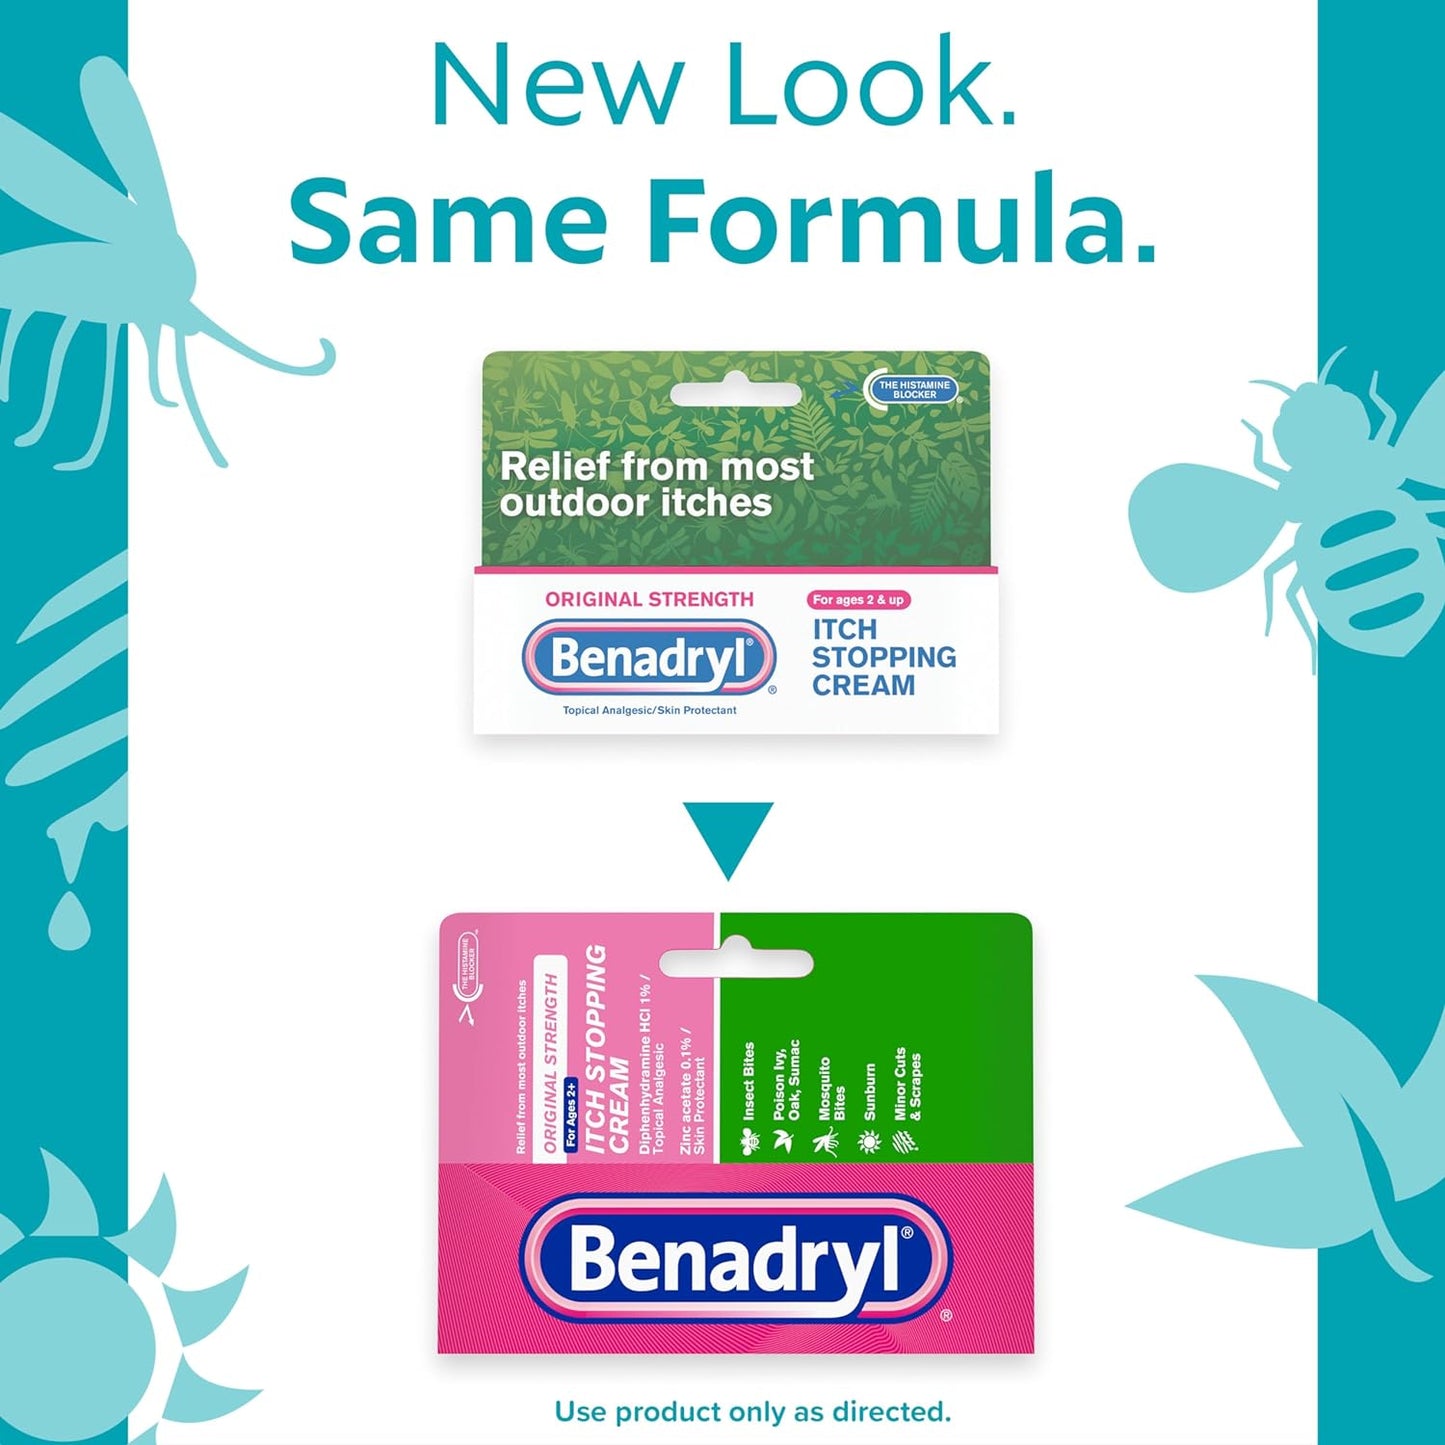 Benadryl Original Strength Itch Stopping Anti-Itch Cream 1 oz